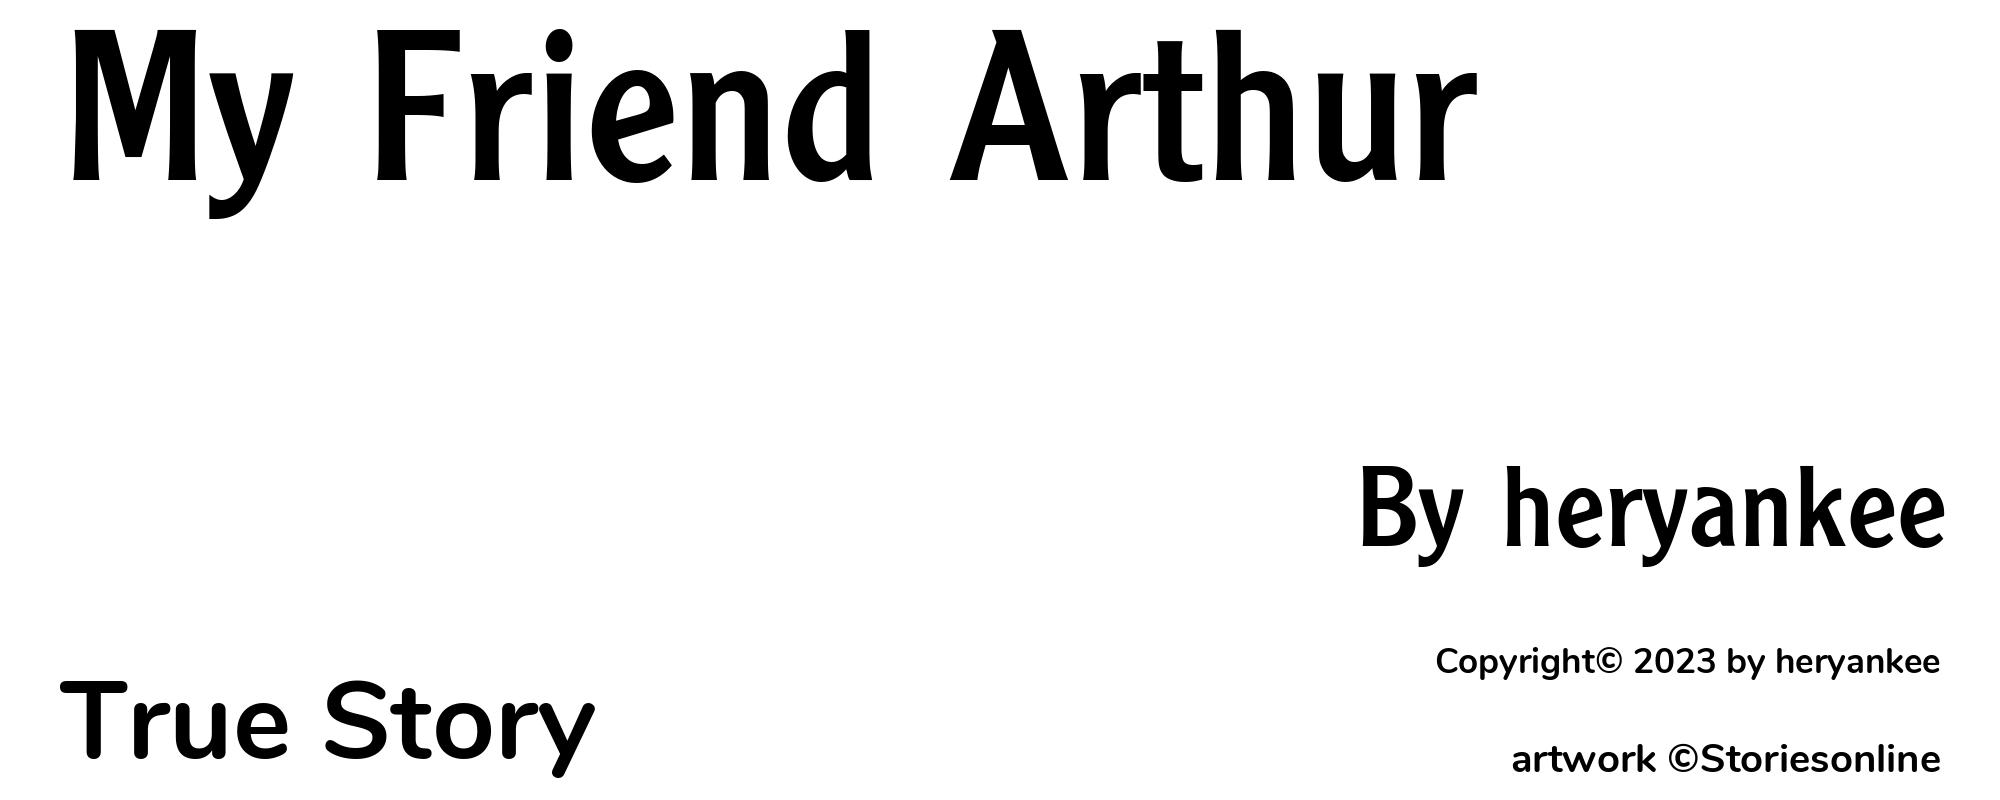 My Friend Arthur - Cover